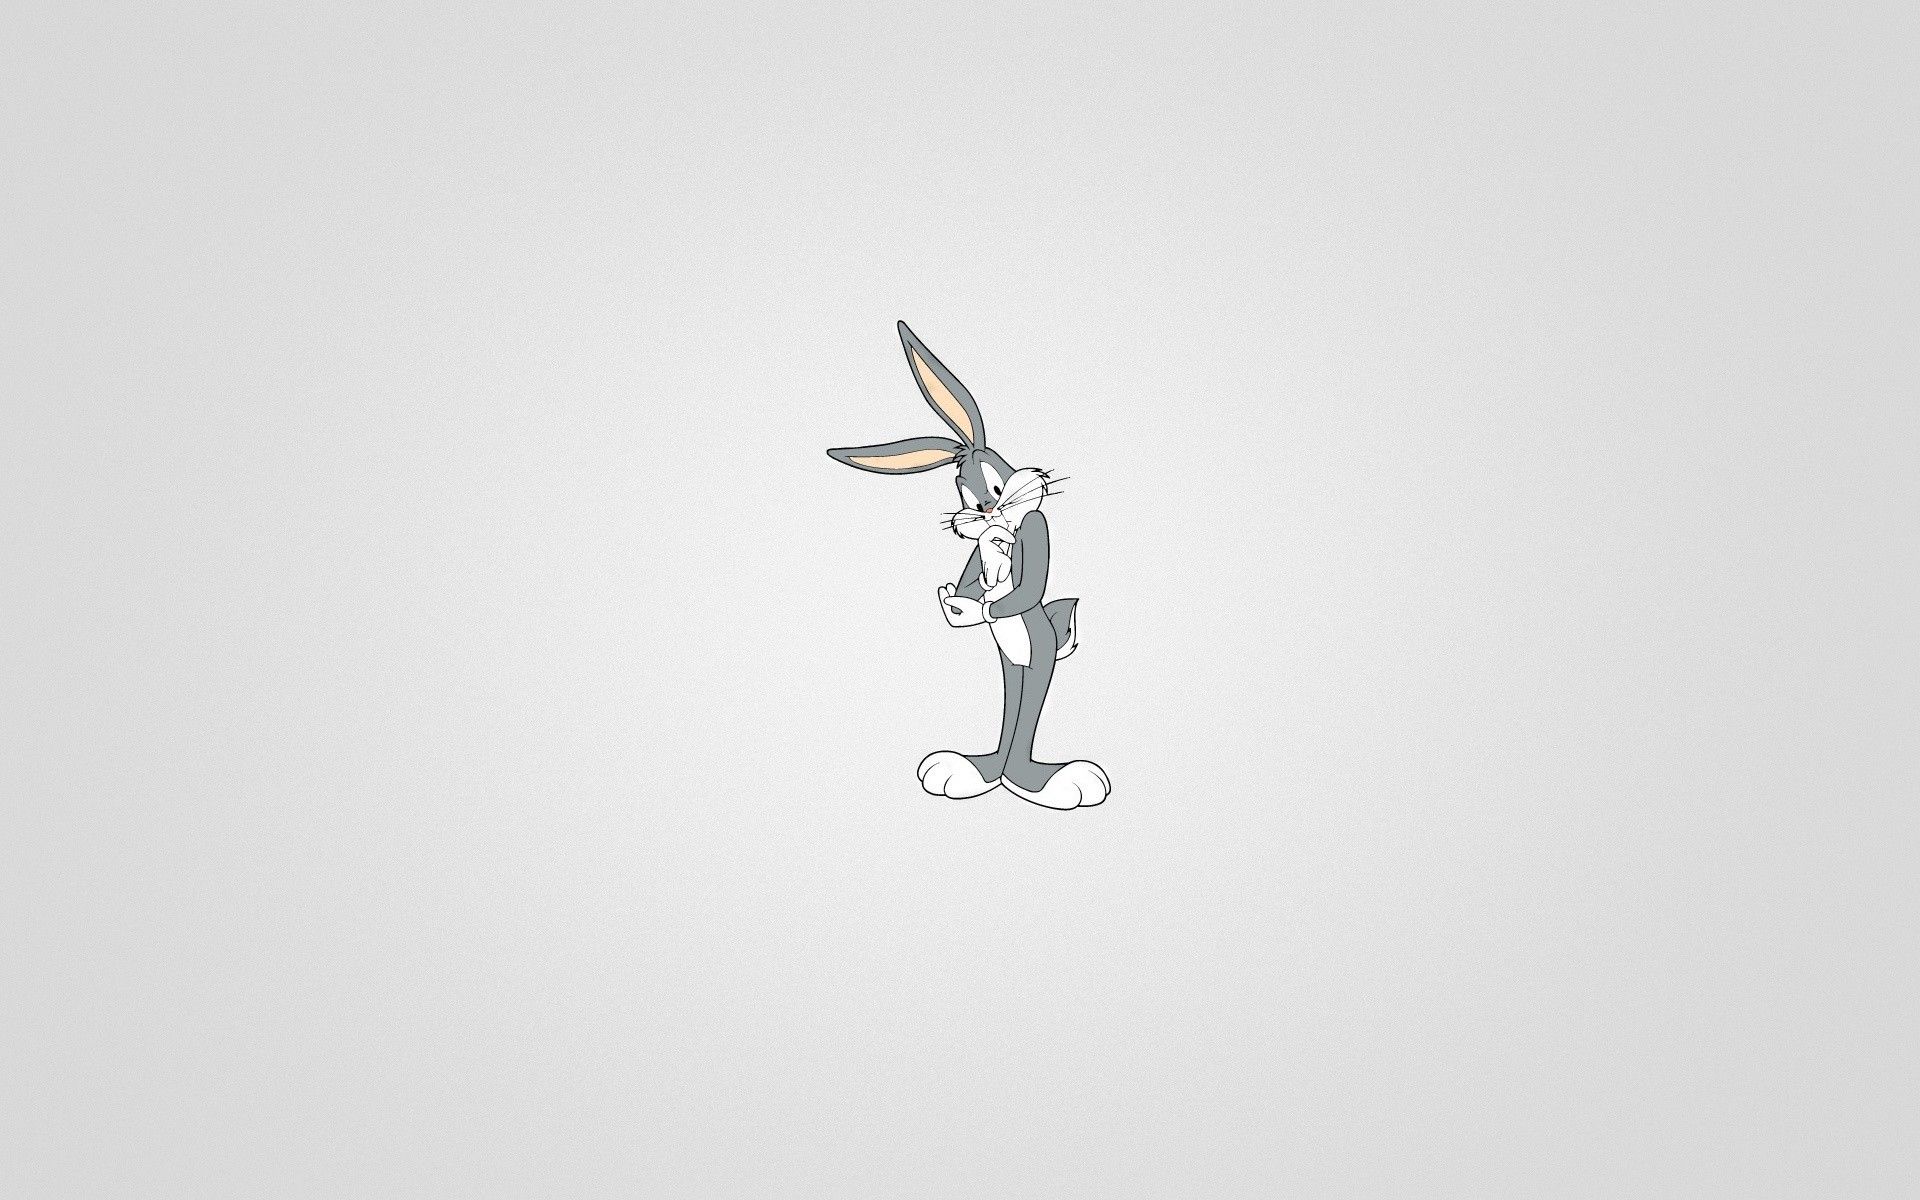 Bugs Bunny Wallpaper background .pavbca.com